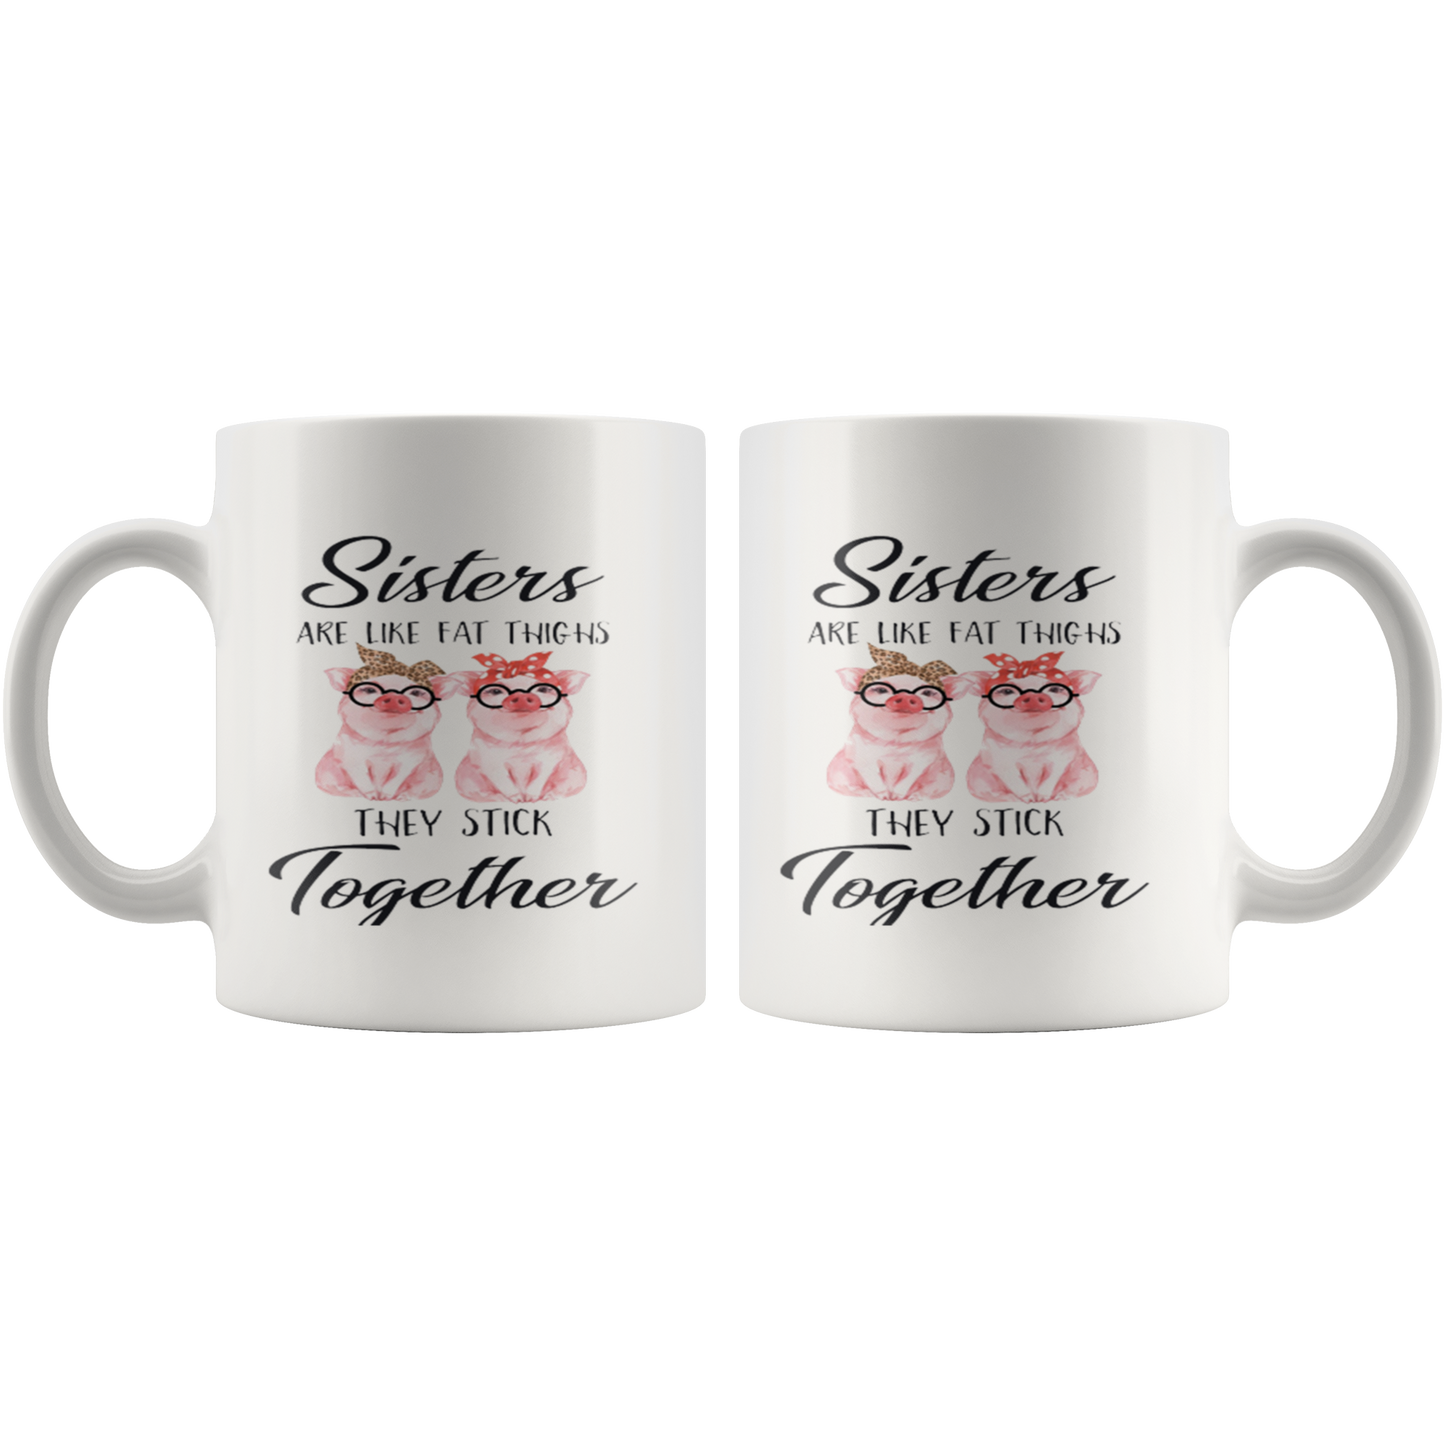 Sisters mug white